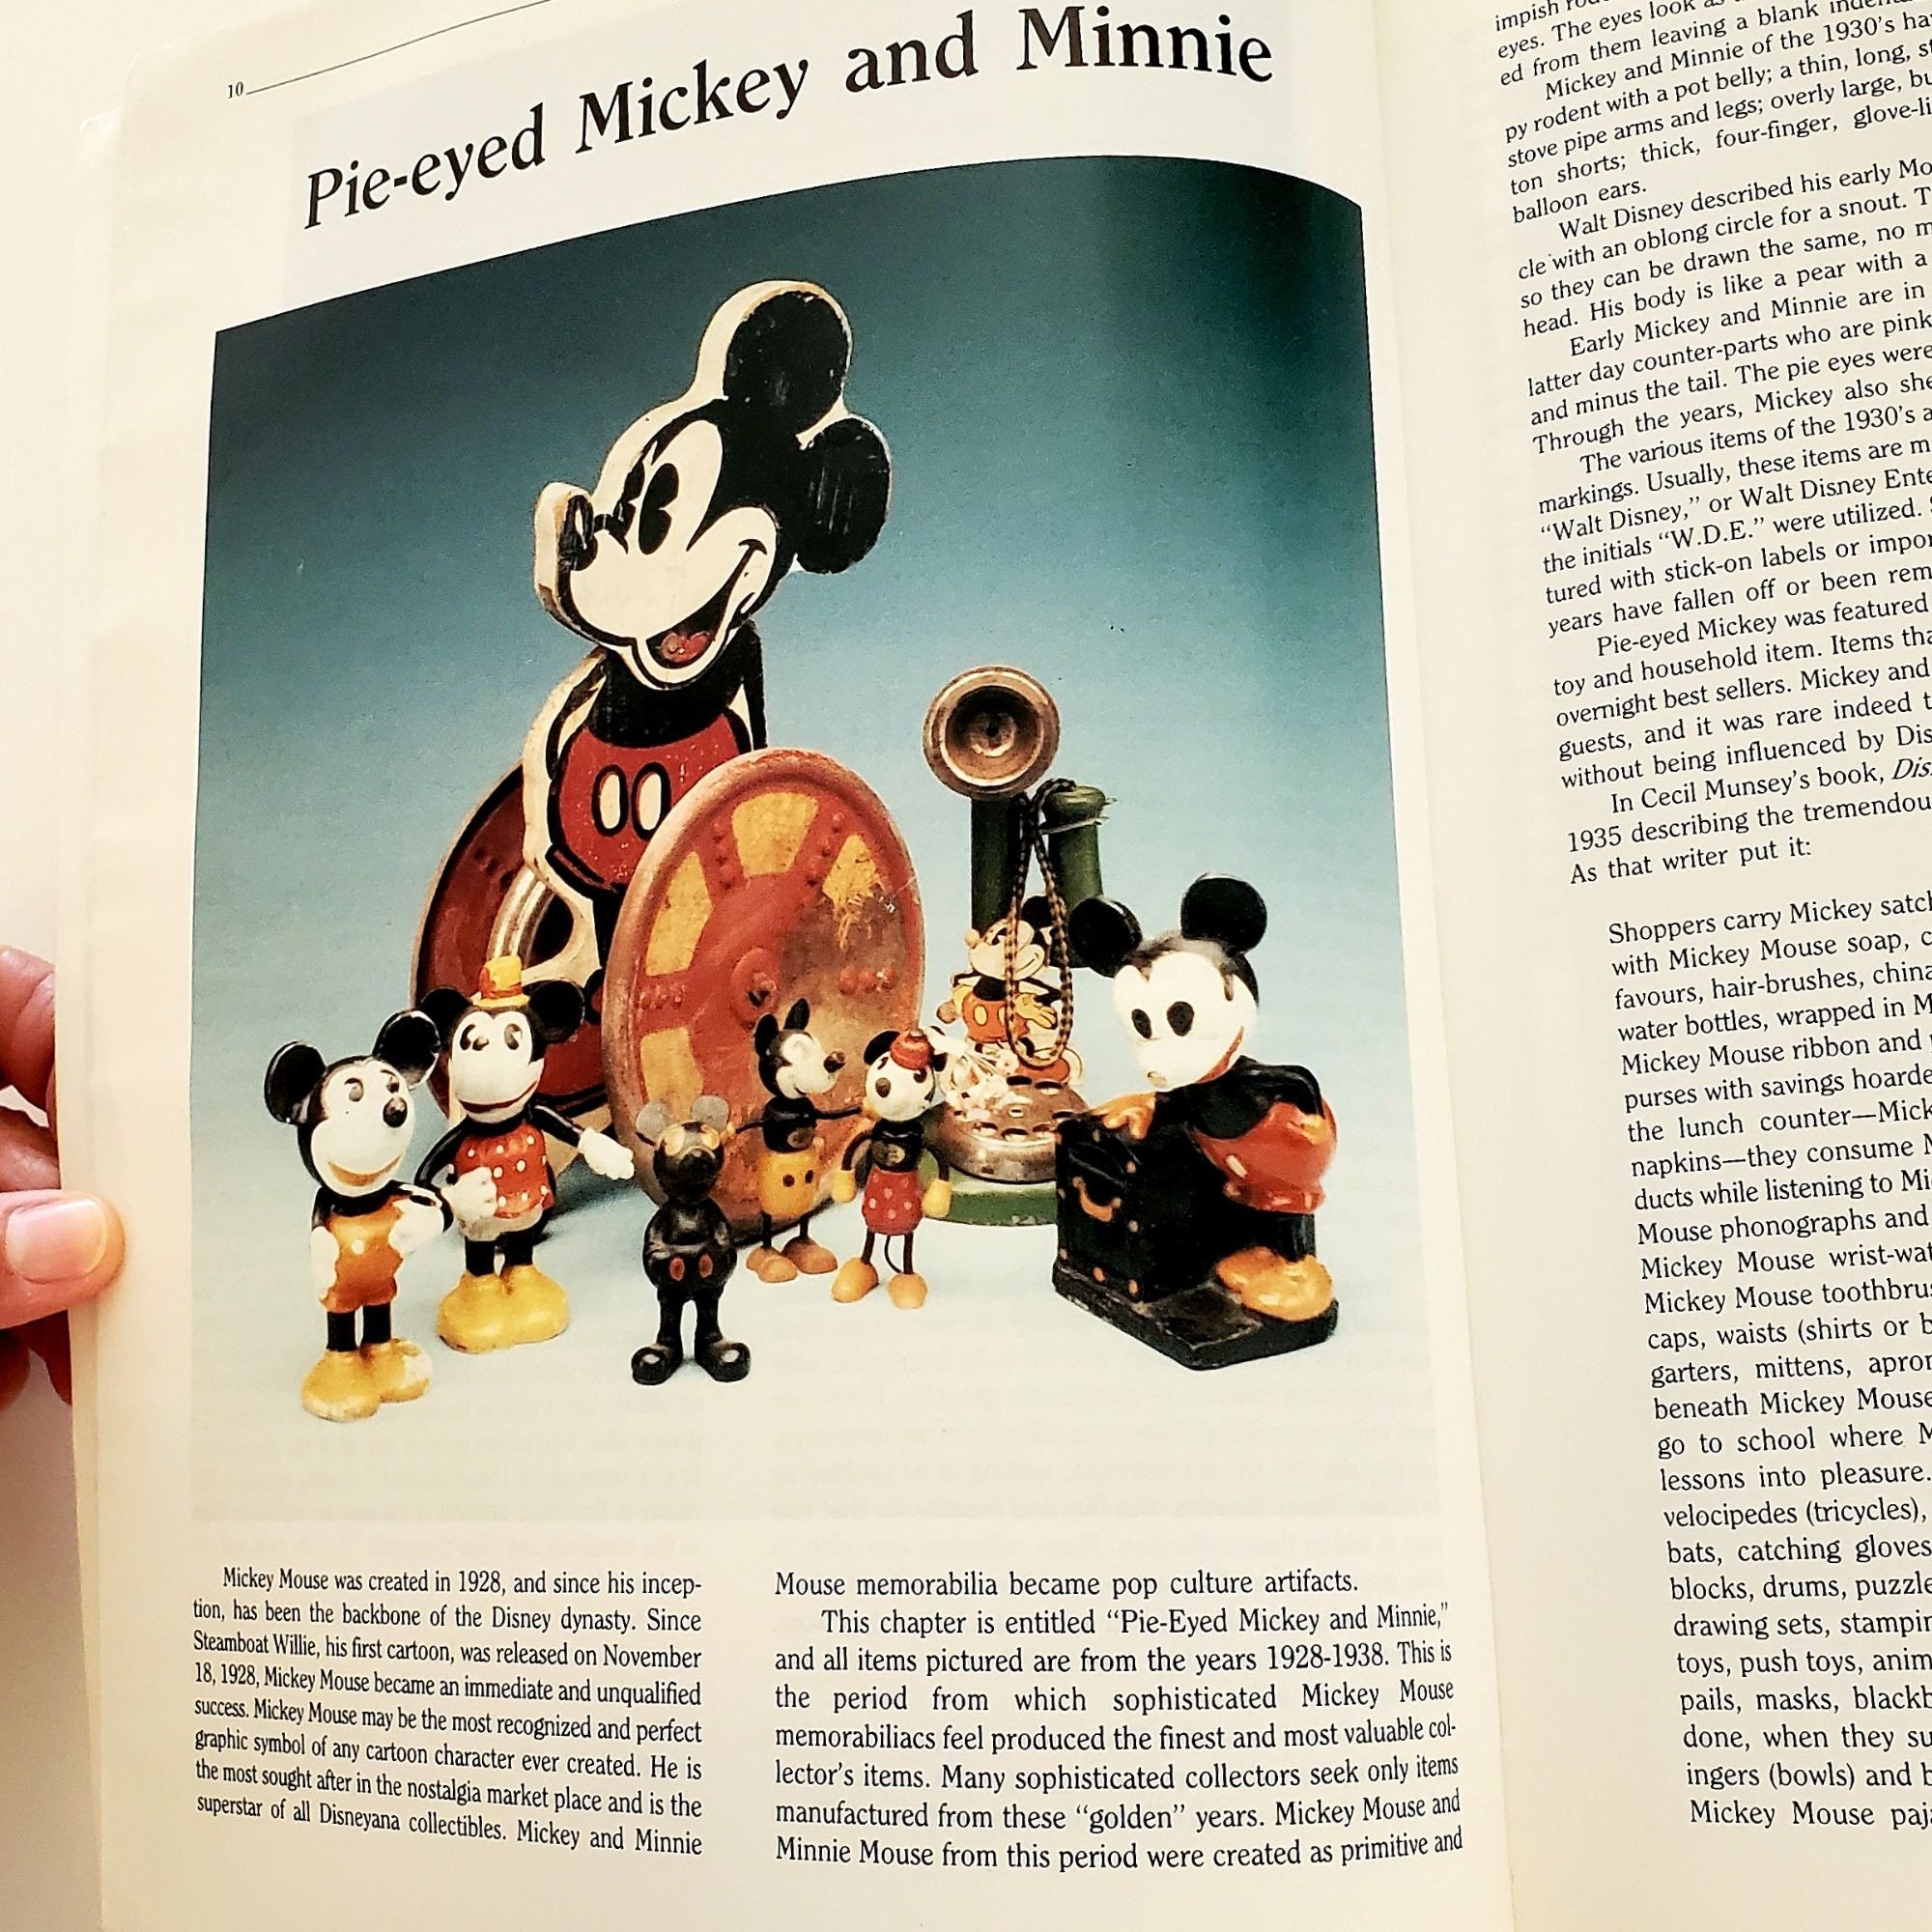 Disney Collectibles Book, Disneyana, Stern's Guide to Disney Collectibles  1989, Michael Stern